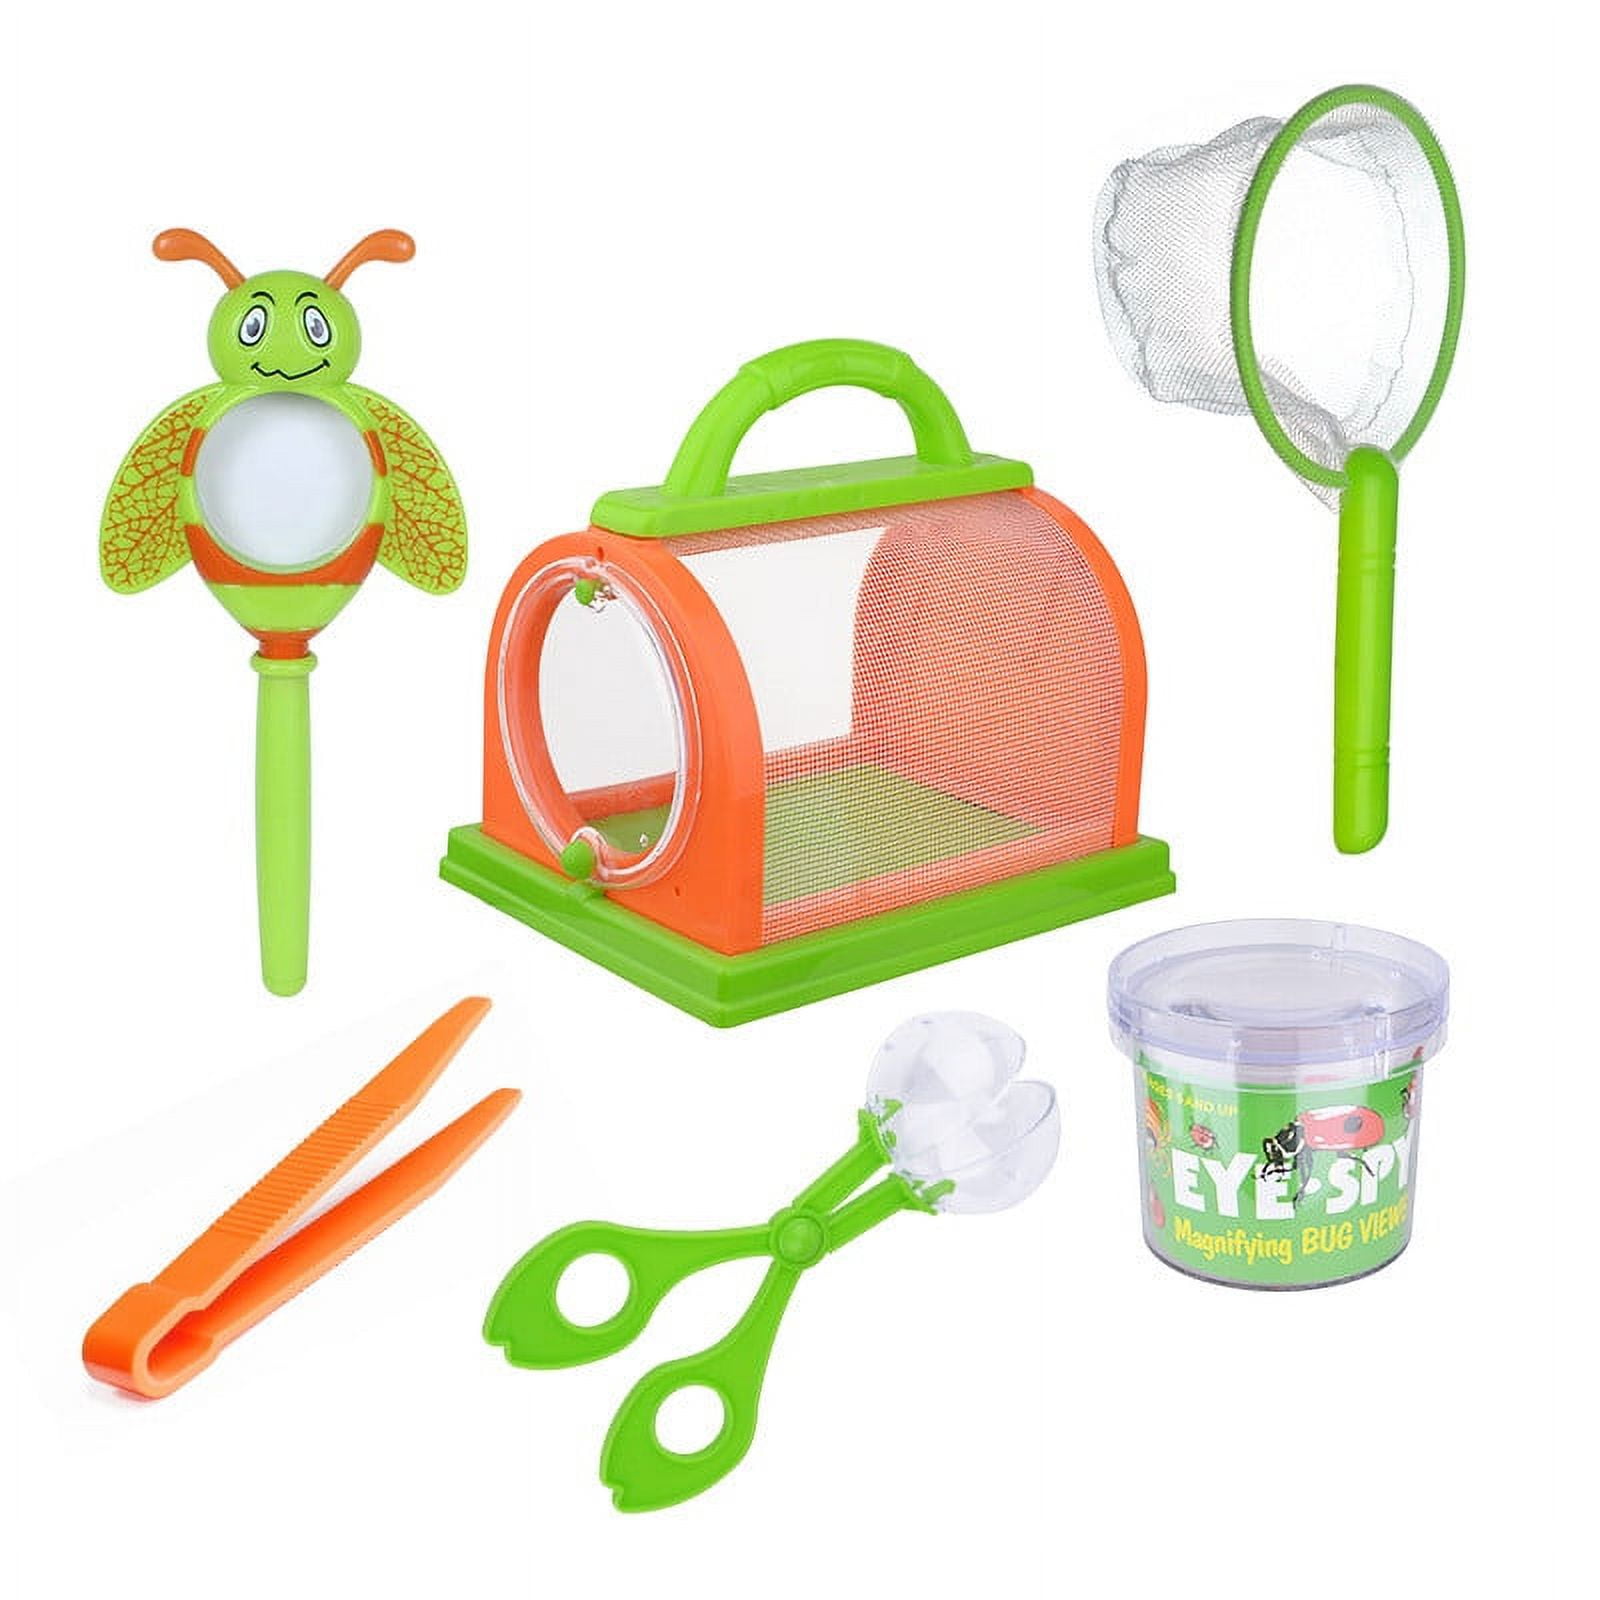 Elainilye Kids Outdoor Explorer Kit, Bug Catcher Kit for Kids, Great Toys  Gift for Boys & Girls Age 3-12 Year Old Clearamce! 